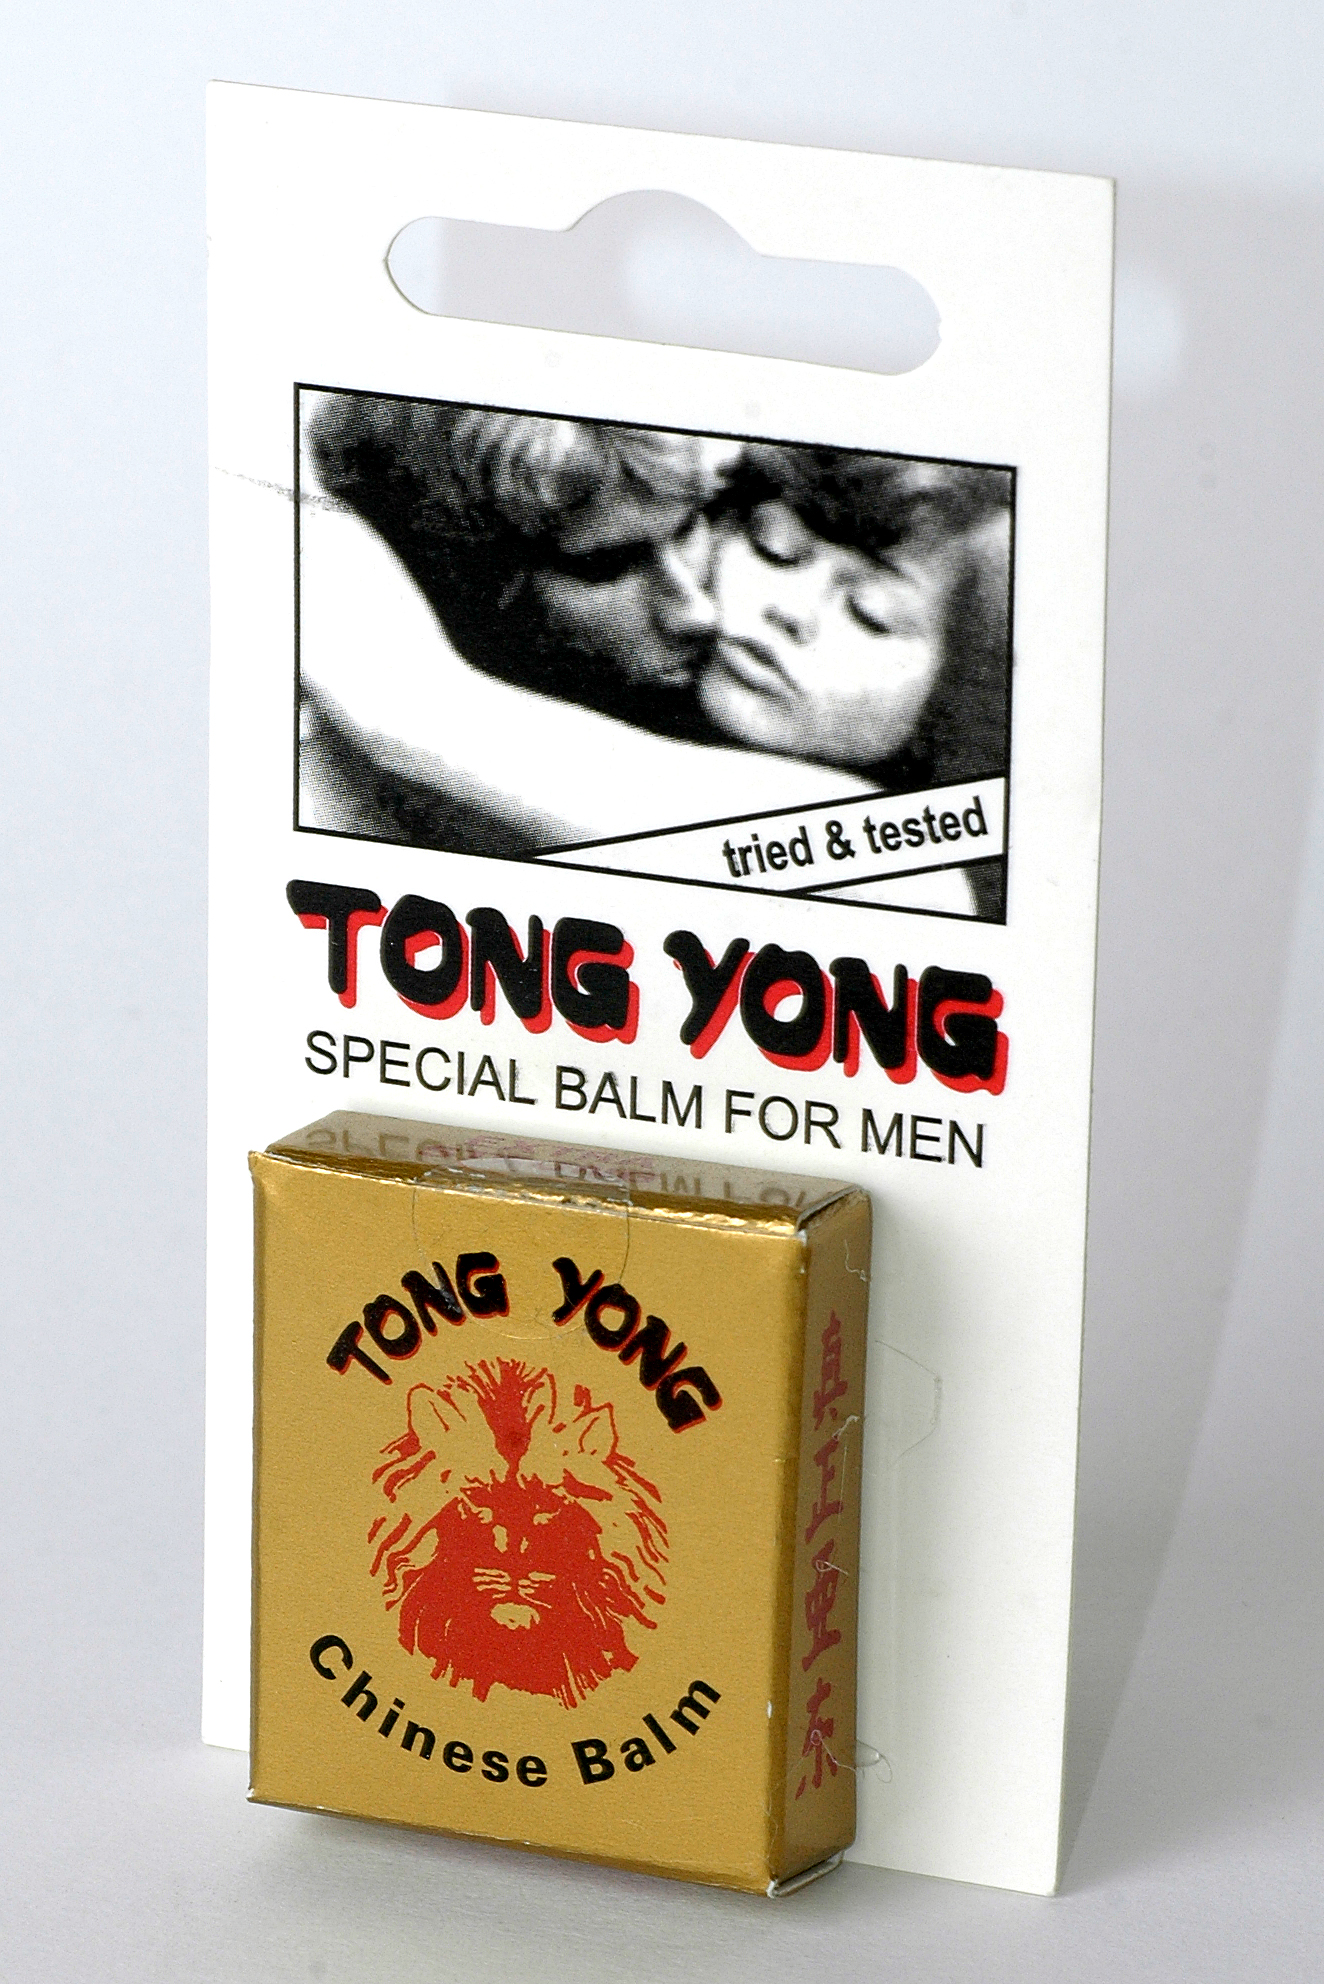 tong-yong-chinese-balm-2ml